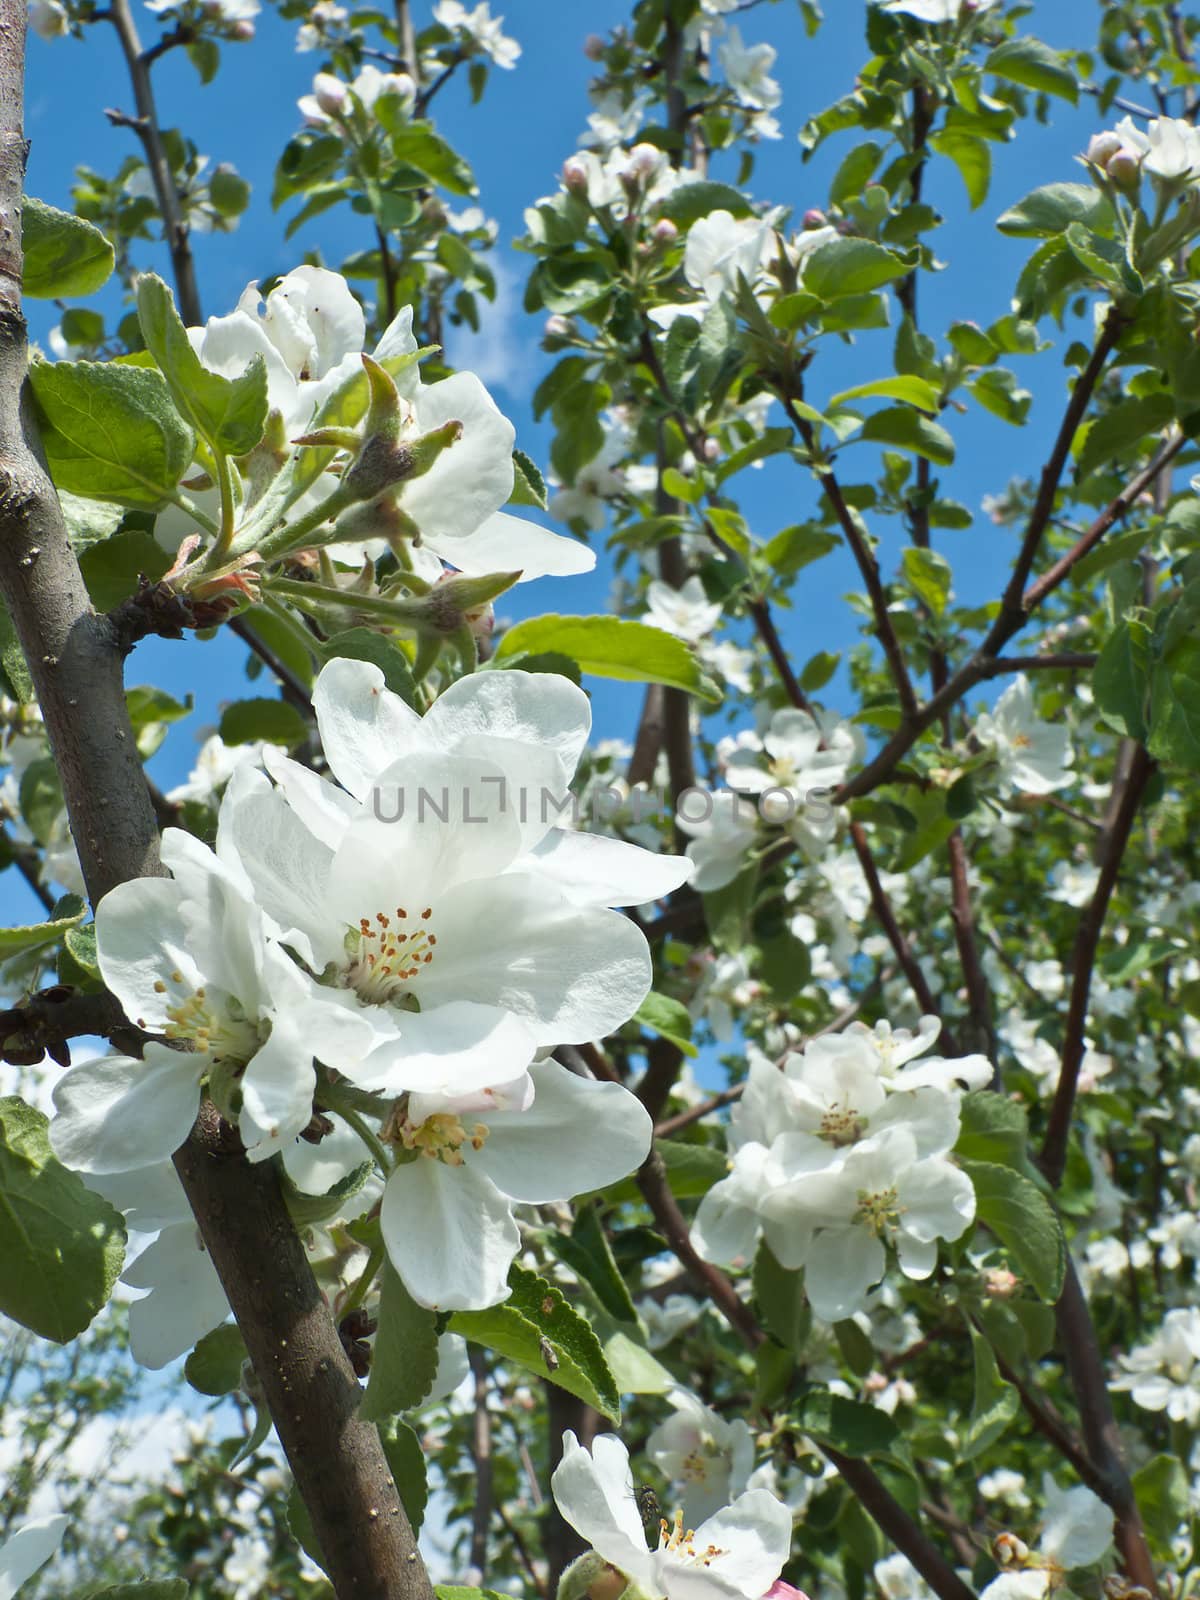 Blooming apple tree against the blue sky